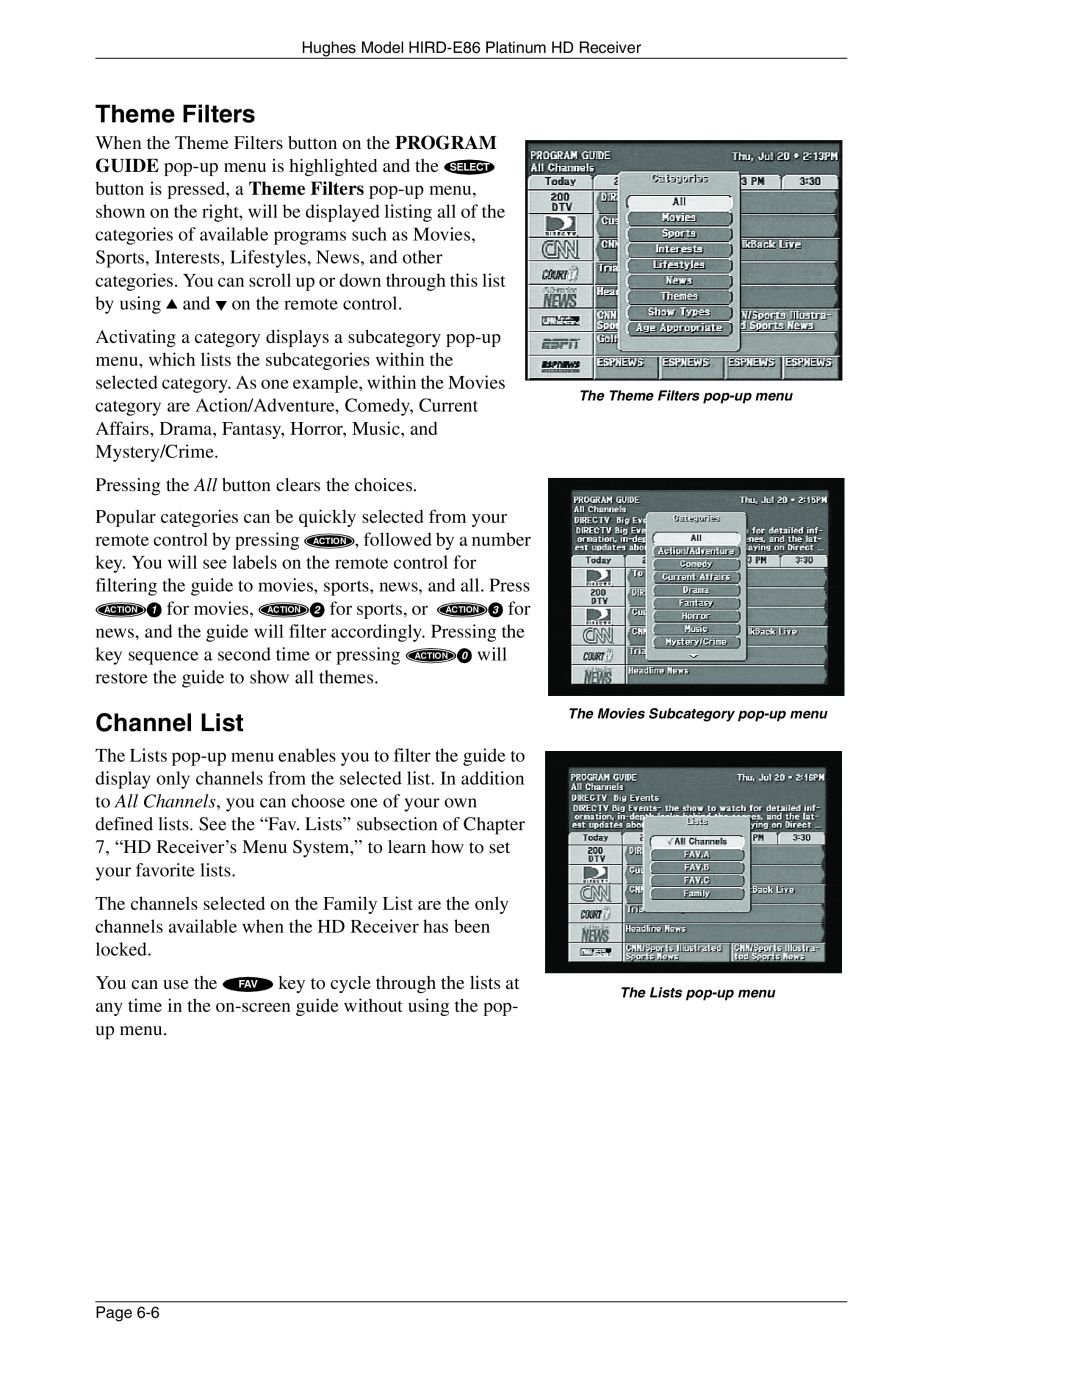 DirecTV HIRD-E86 manual Theme Filters, Channel List 